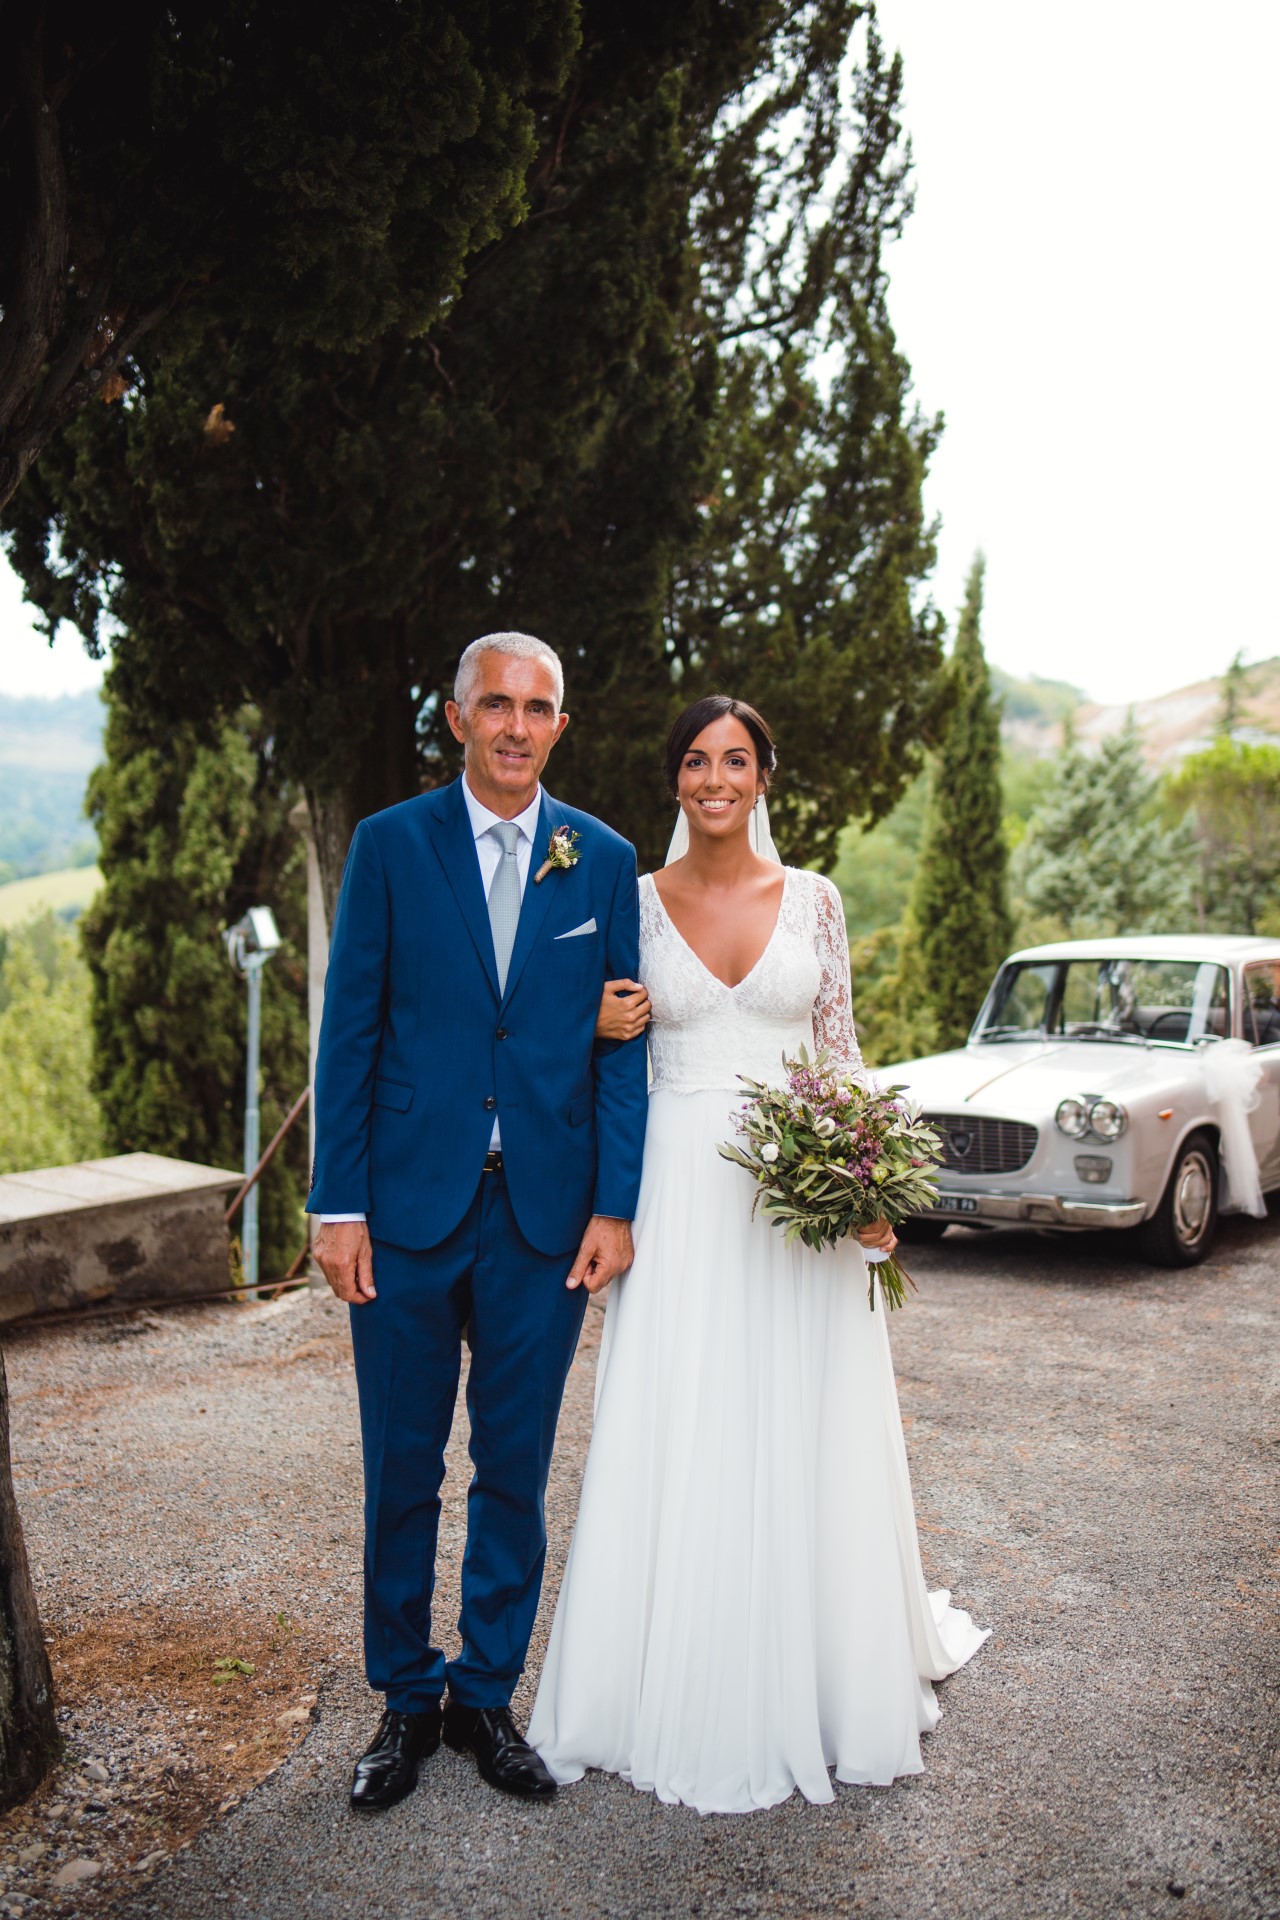 Ste&Michi fotografo matrimonio destination wedding photographer videographer luxury reportage italia italy como lake amalfi coast apulia rome roma sicily masseria potenti tuscany